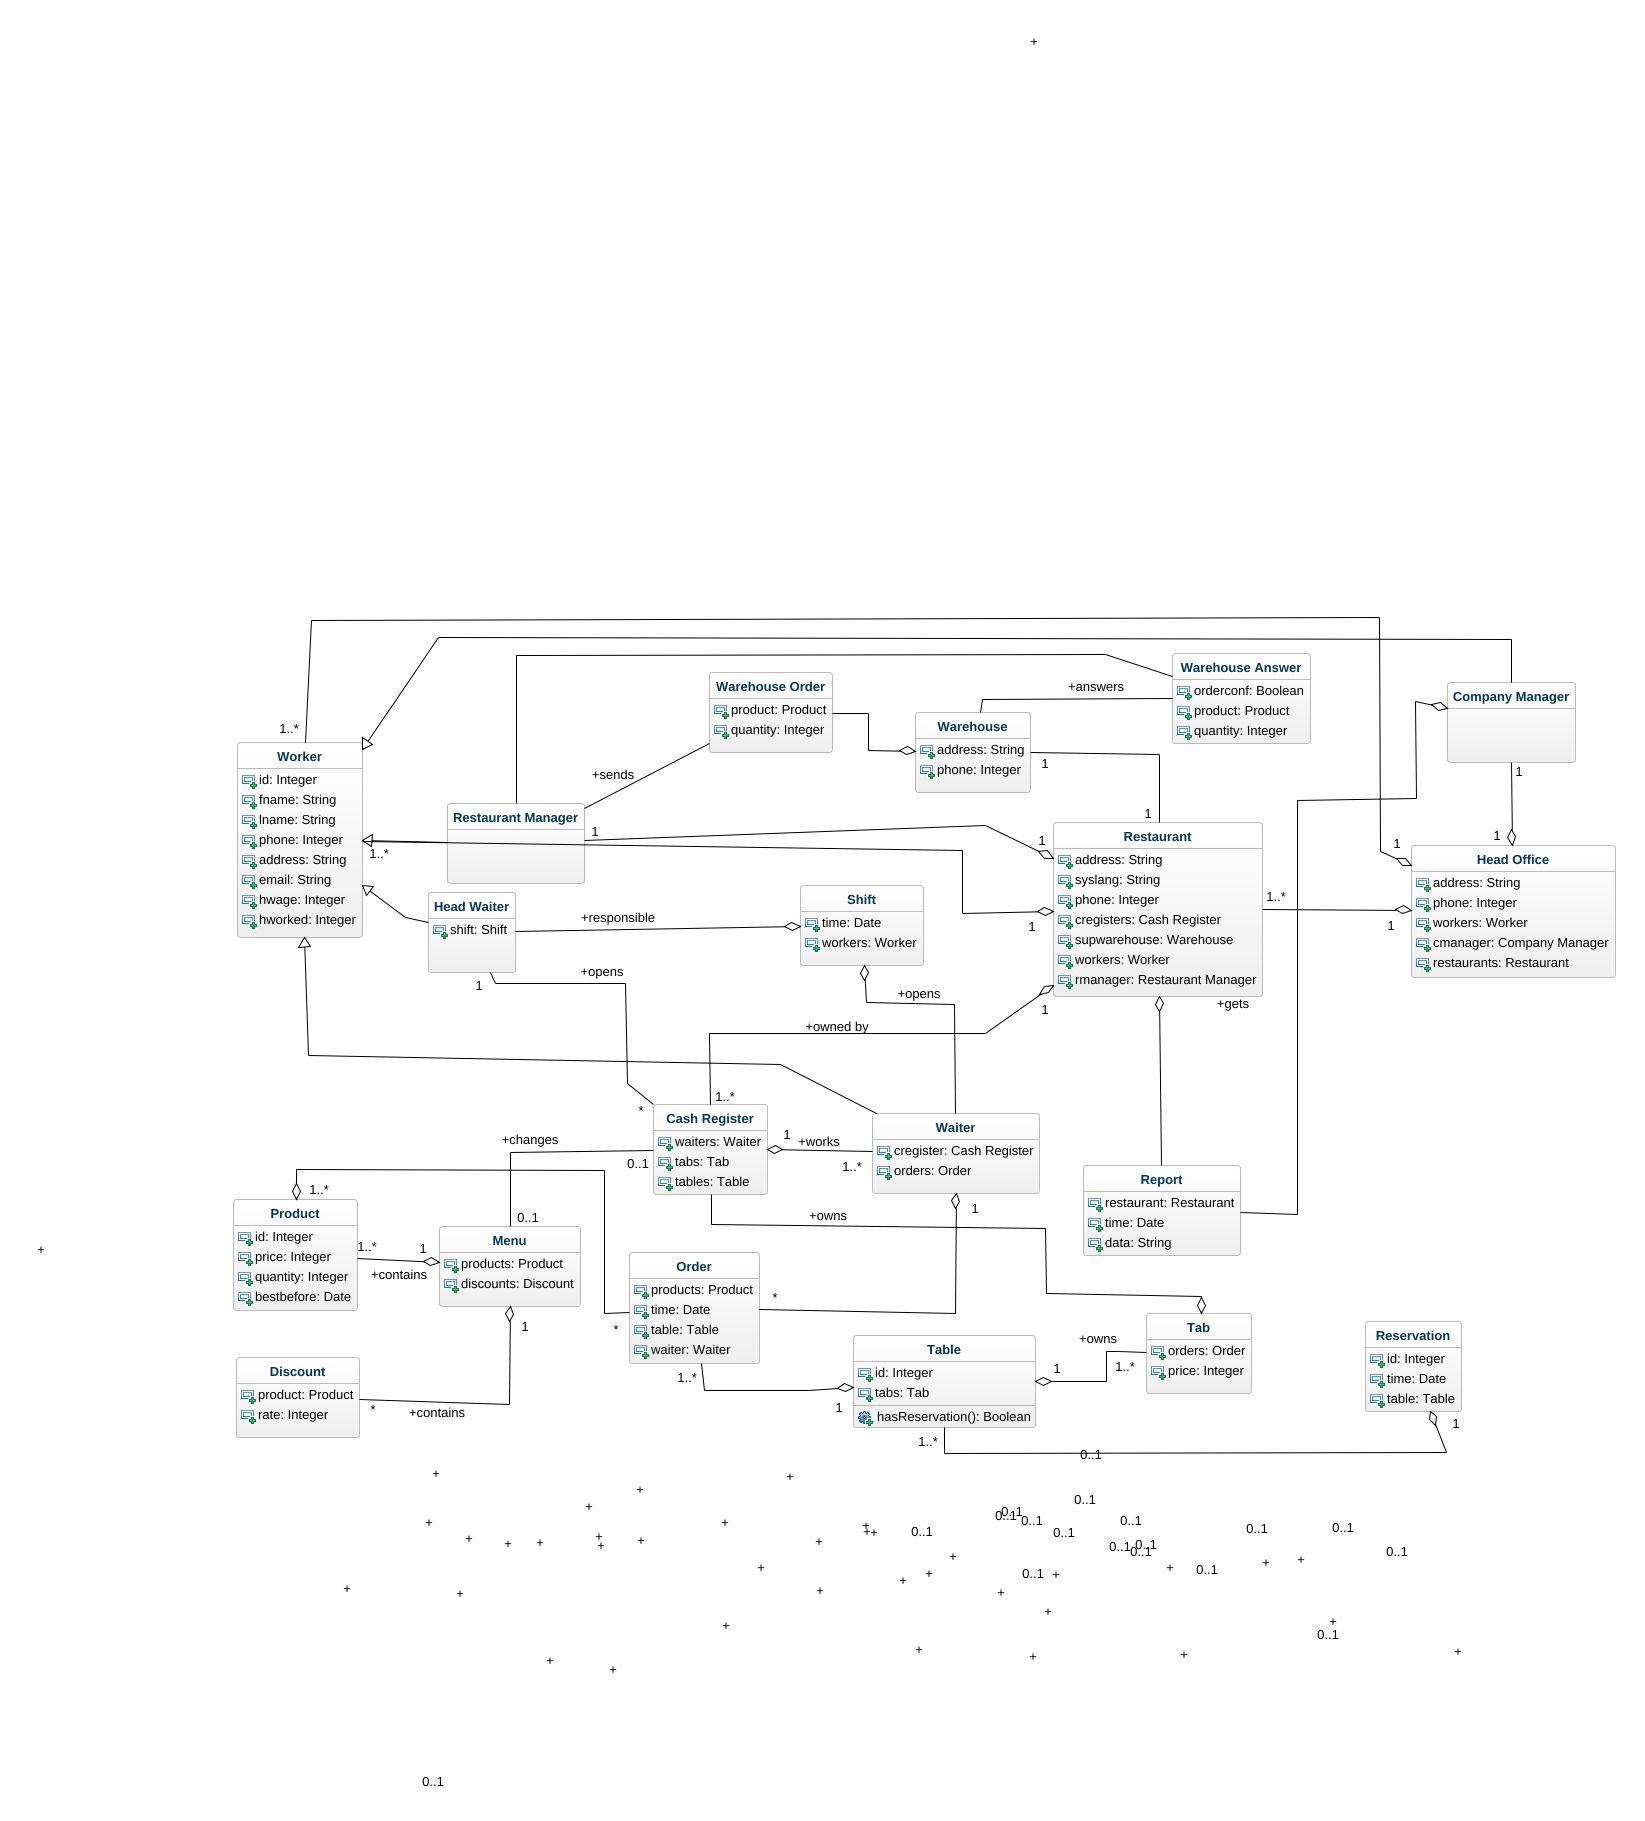 raukas - POS_System_Class_Diagram